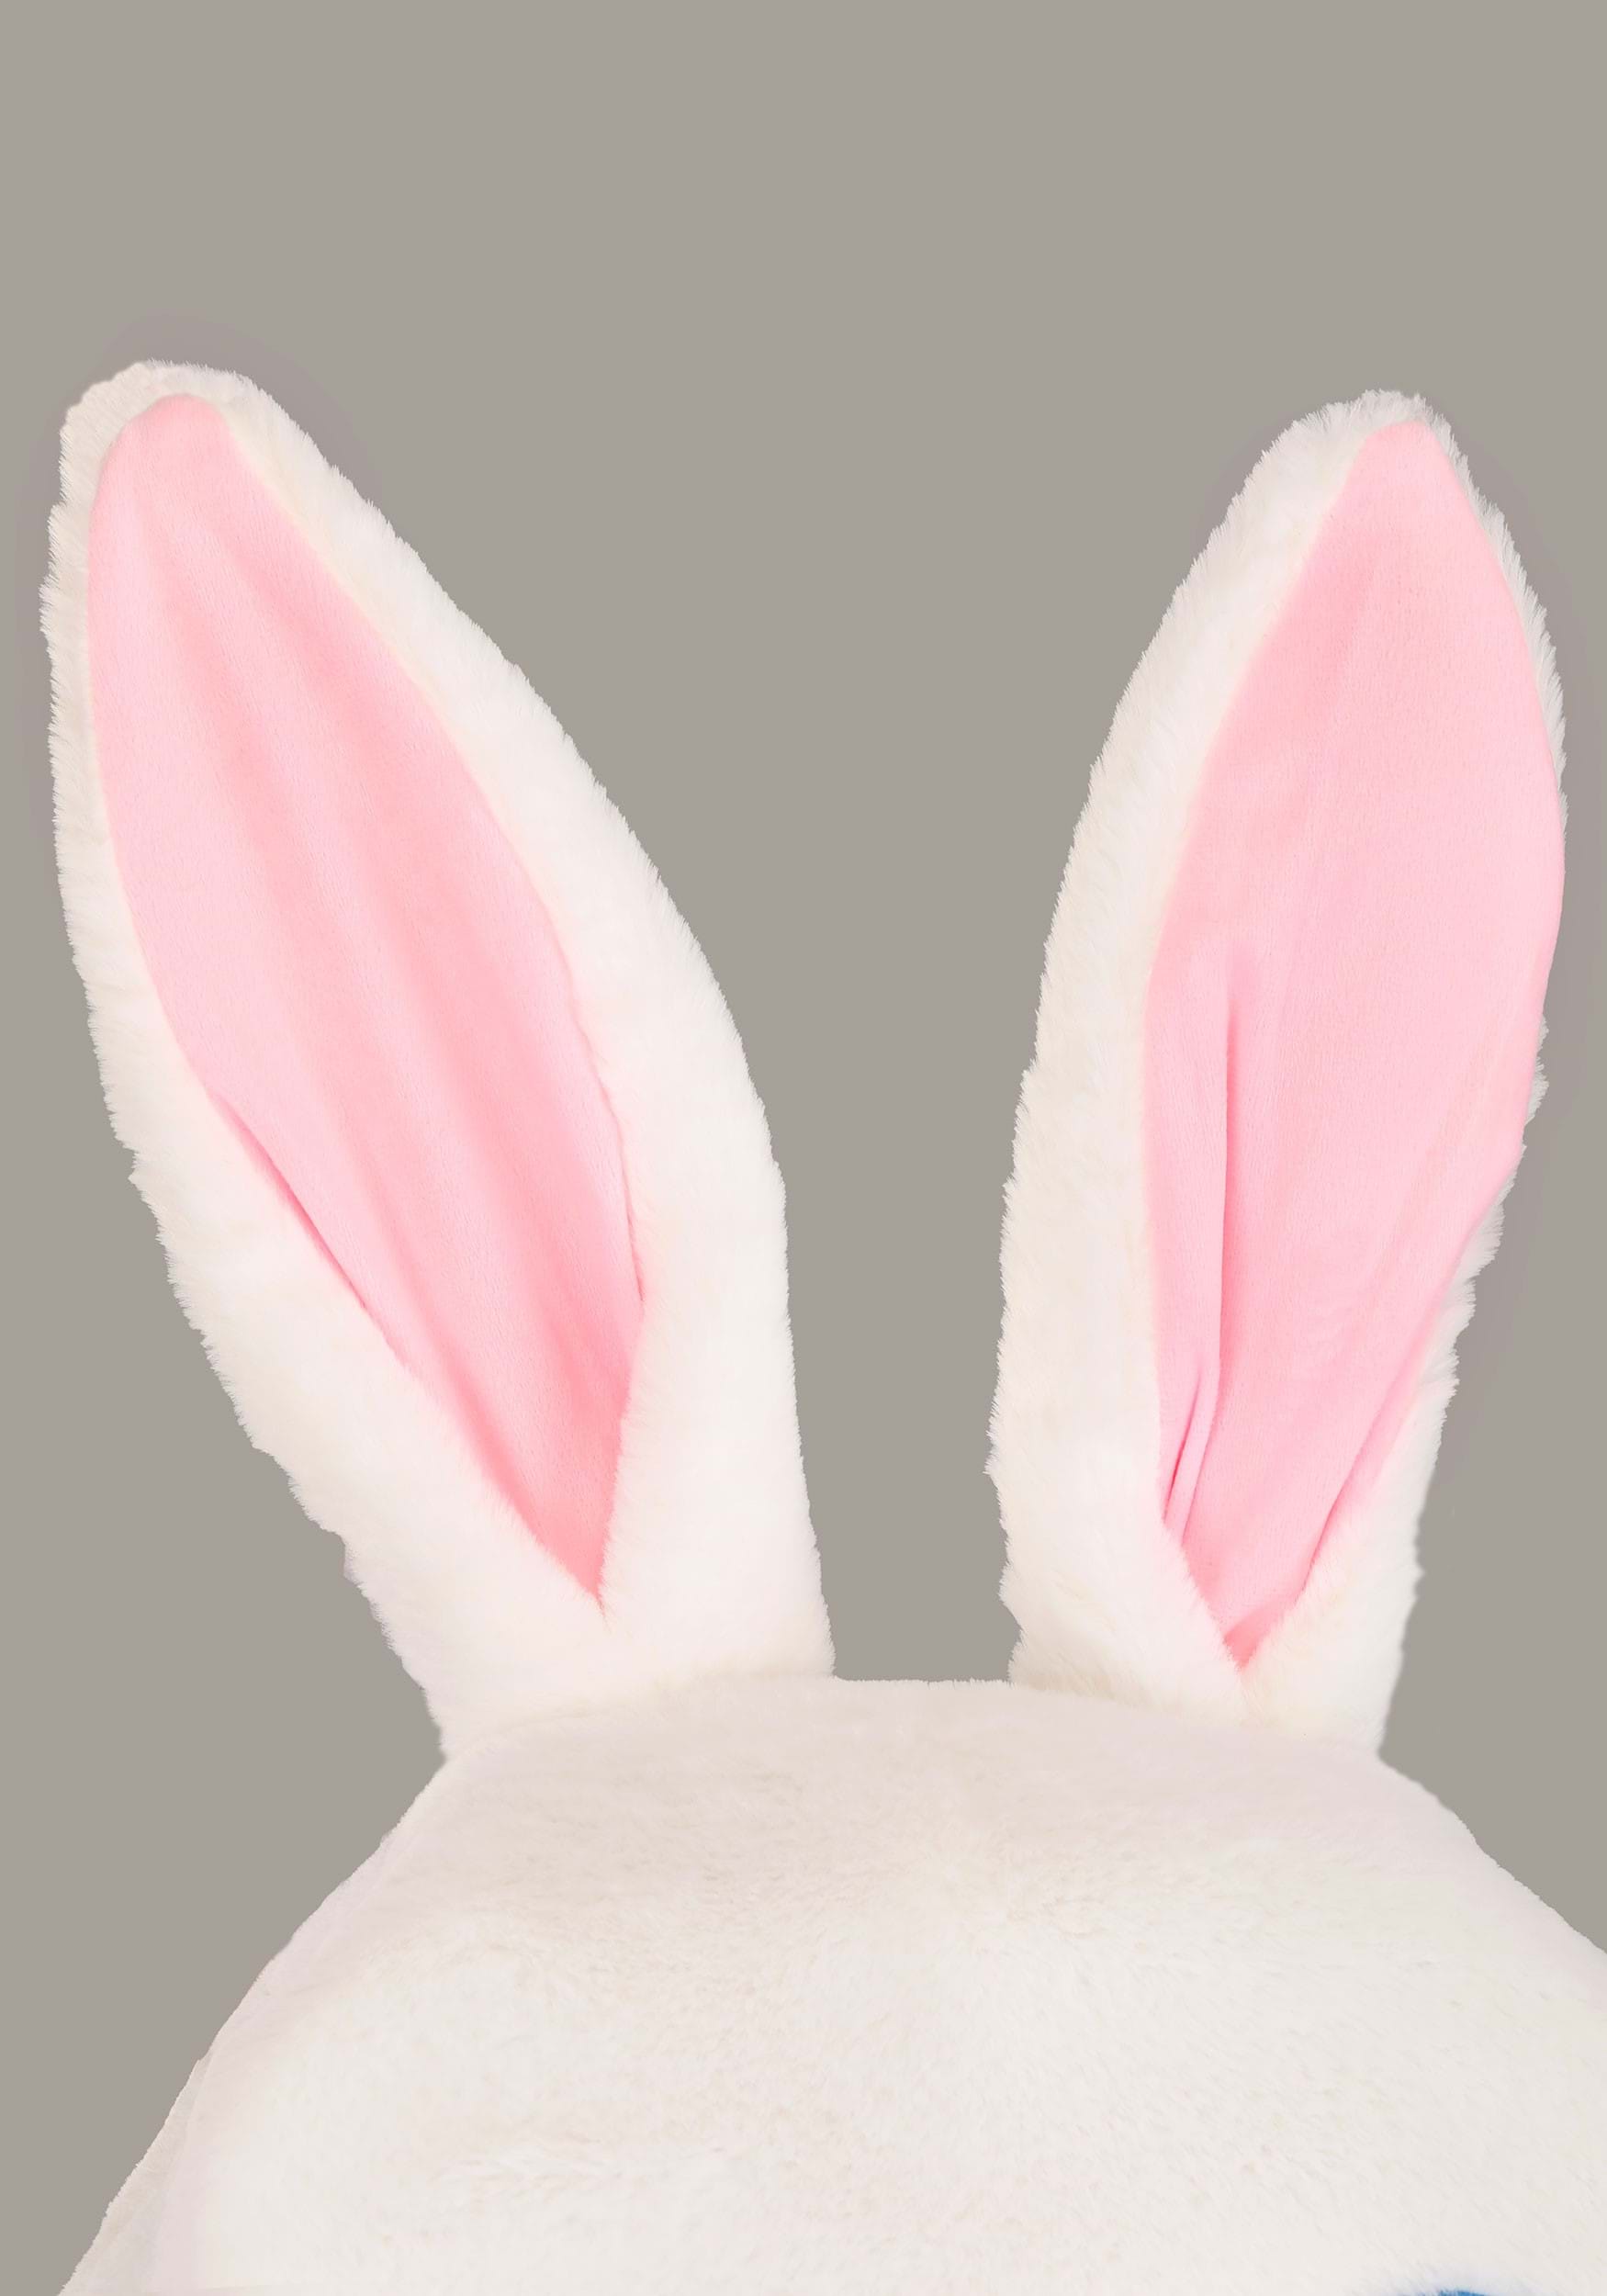 Mascot Easter Bunny Plus Size Fancy Dress Costume